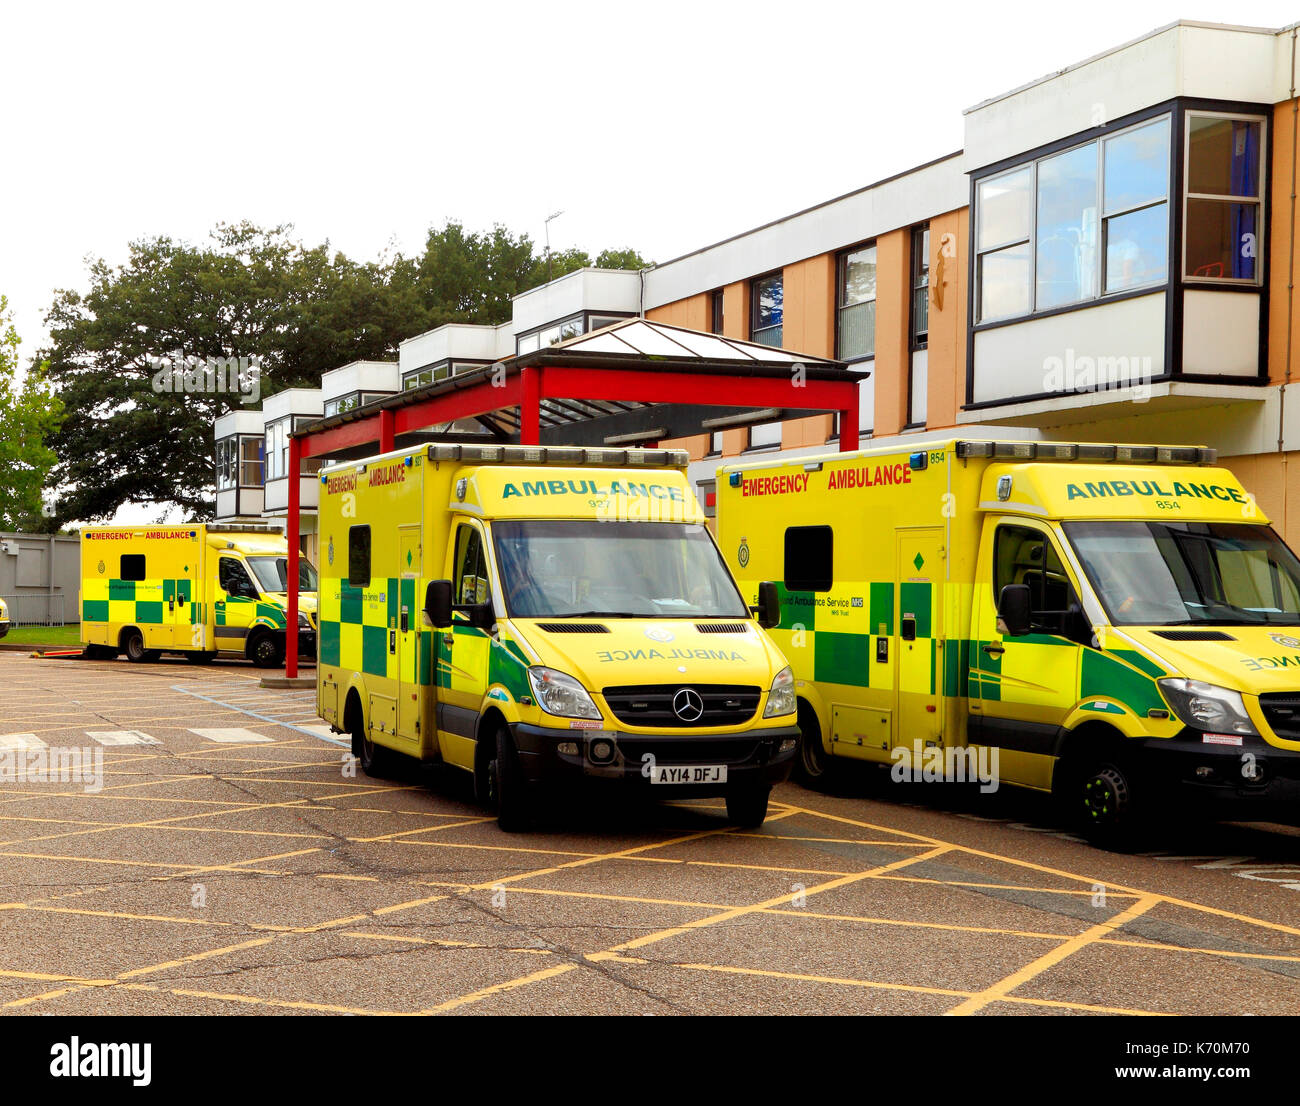 Queen Elizabeth Hospital, Accident & Emergency Unit, A & E, ambulances, police car, Kings Lynn, Norfolk, England, UK, NHS Hospitals, ambulance Stock Photo